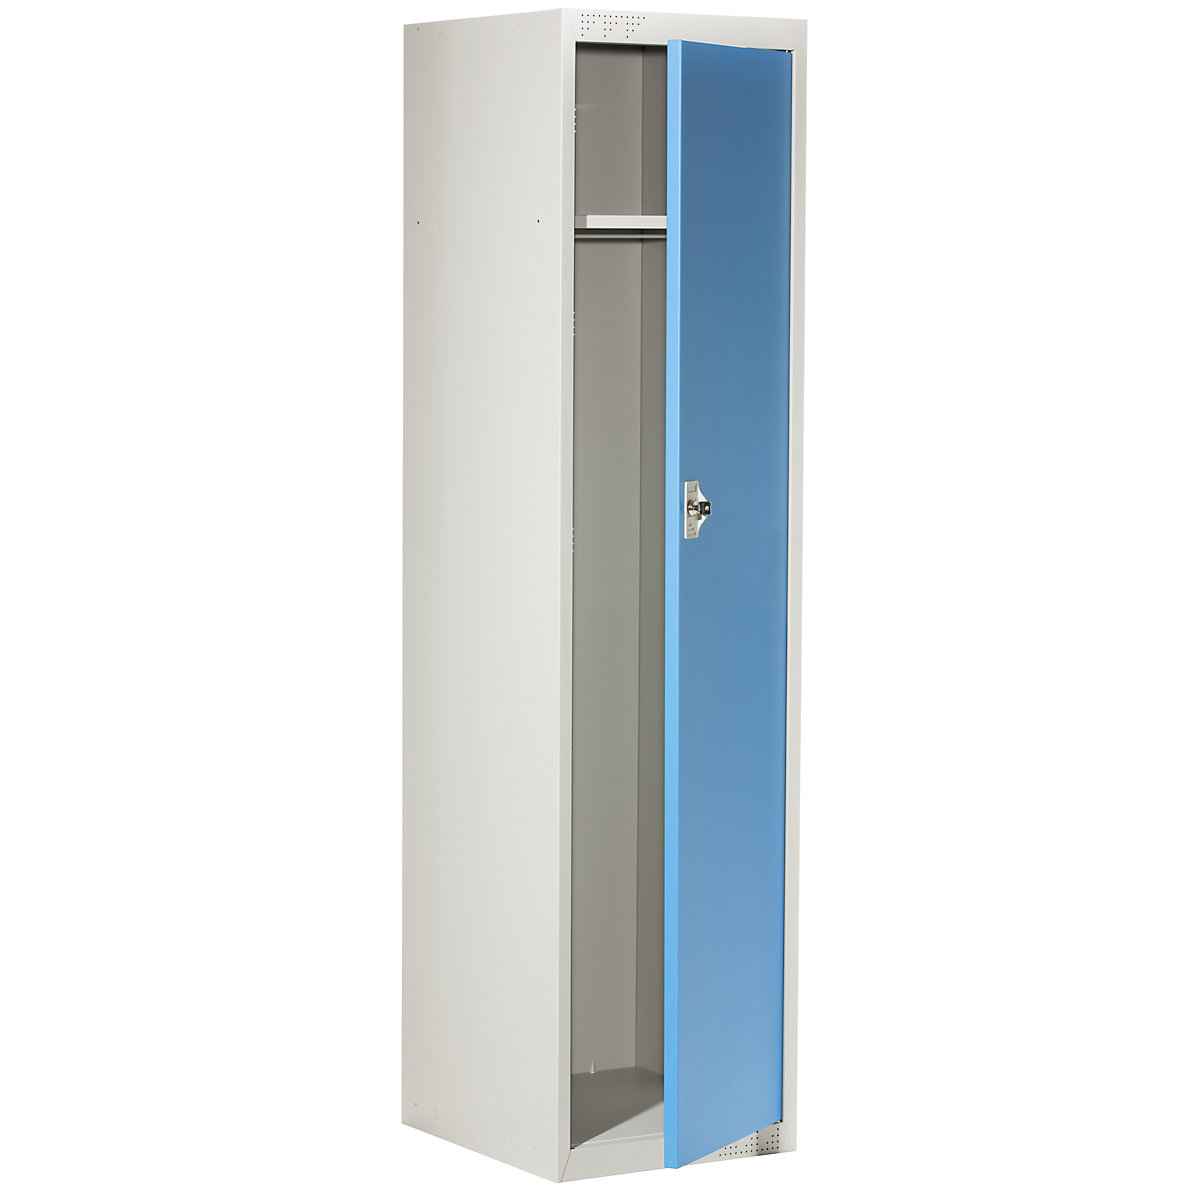 Cloakroom locker system – eurokraft basic, with standard and extension modules, HxWxD 1800 x 450 x 500 mm, 1 hat shelf, 1 clothes rail, light grey / light blue, standard unit-2